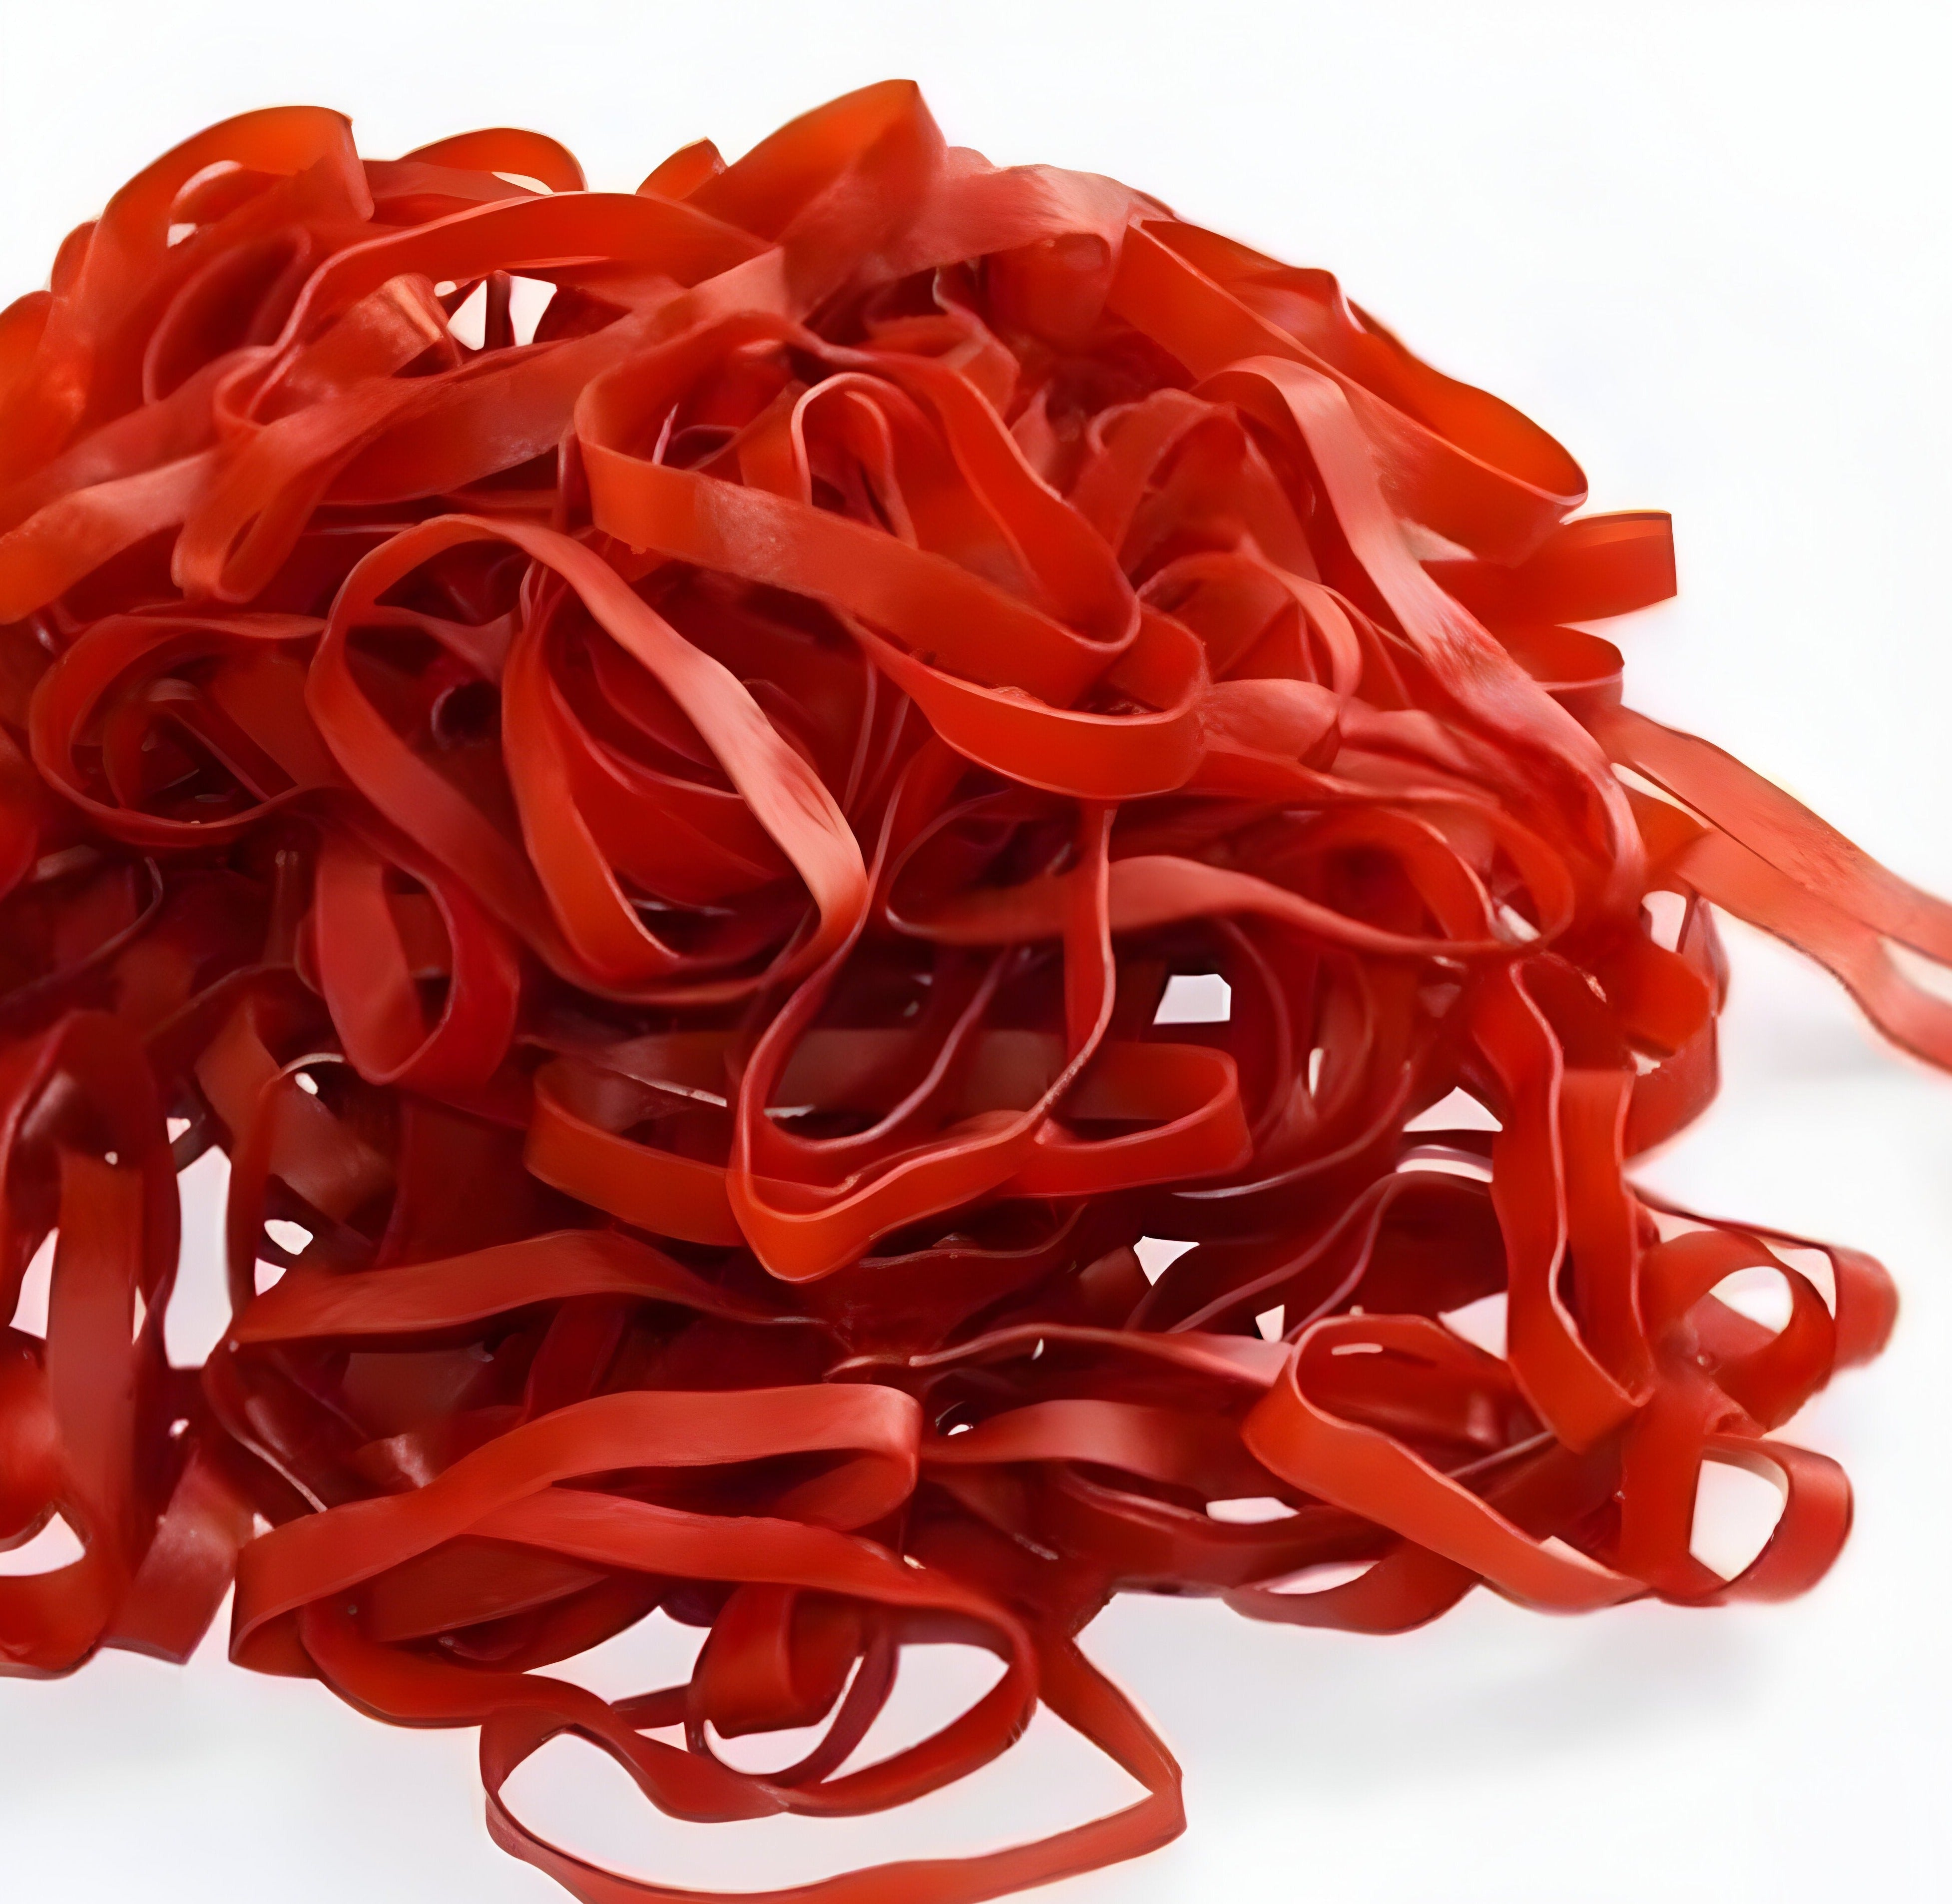 KL Rubber - #16 Red Natural Biodegradable Elastic Rubber Bands, 1lb/Pk - 465099